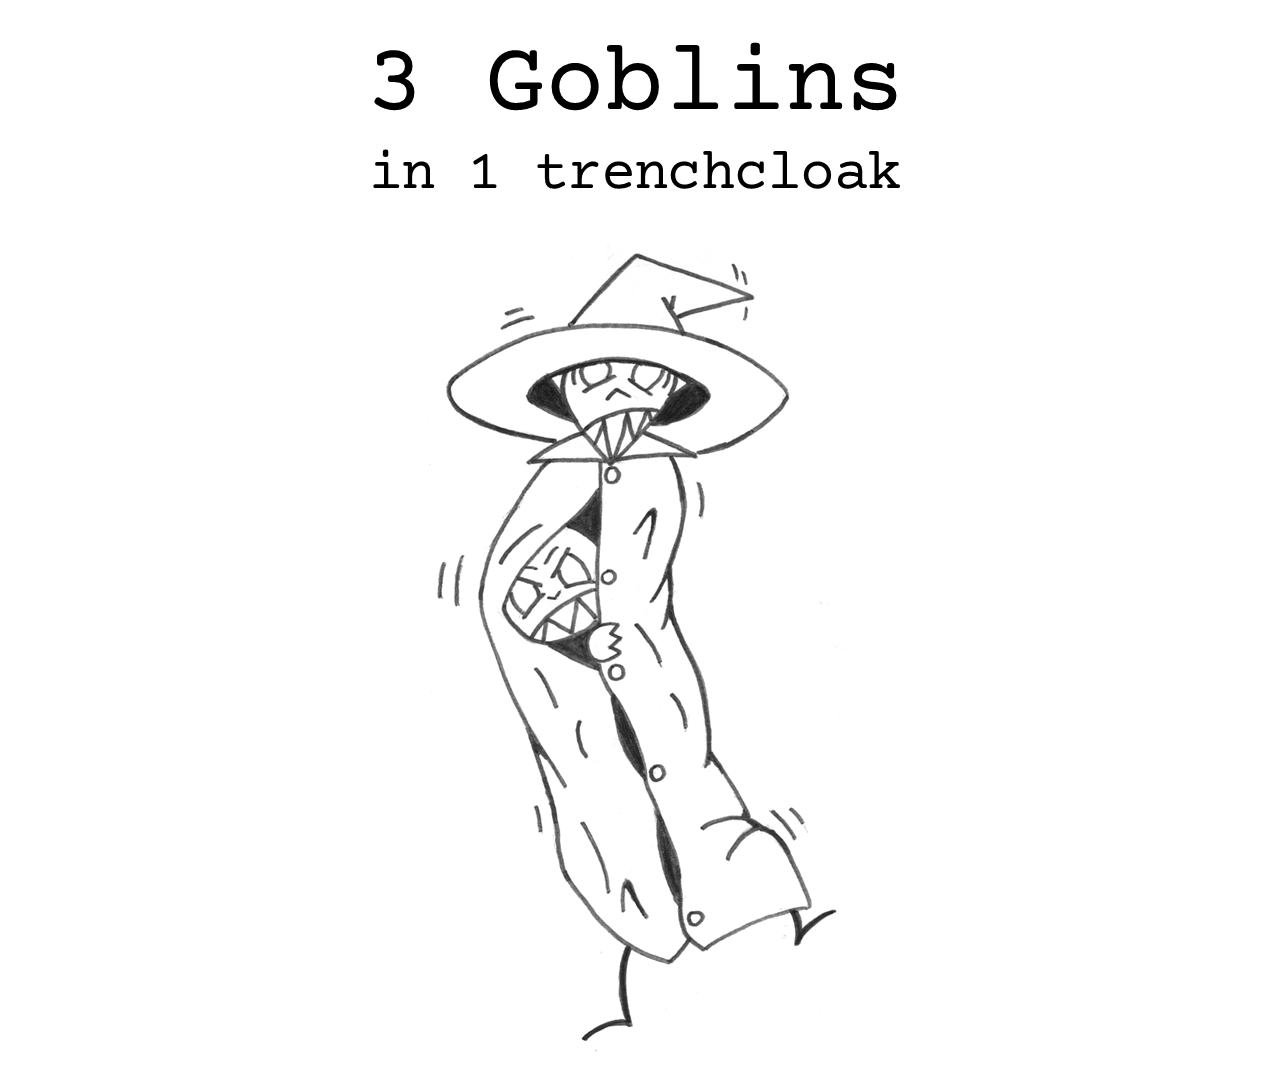 3 Goblins in 1 trenchcloak